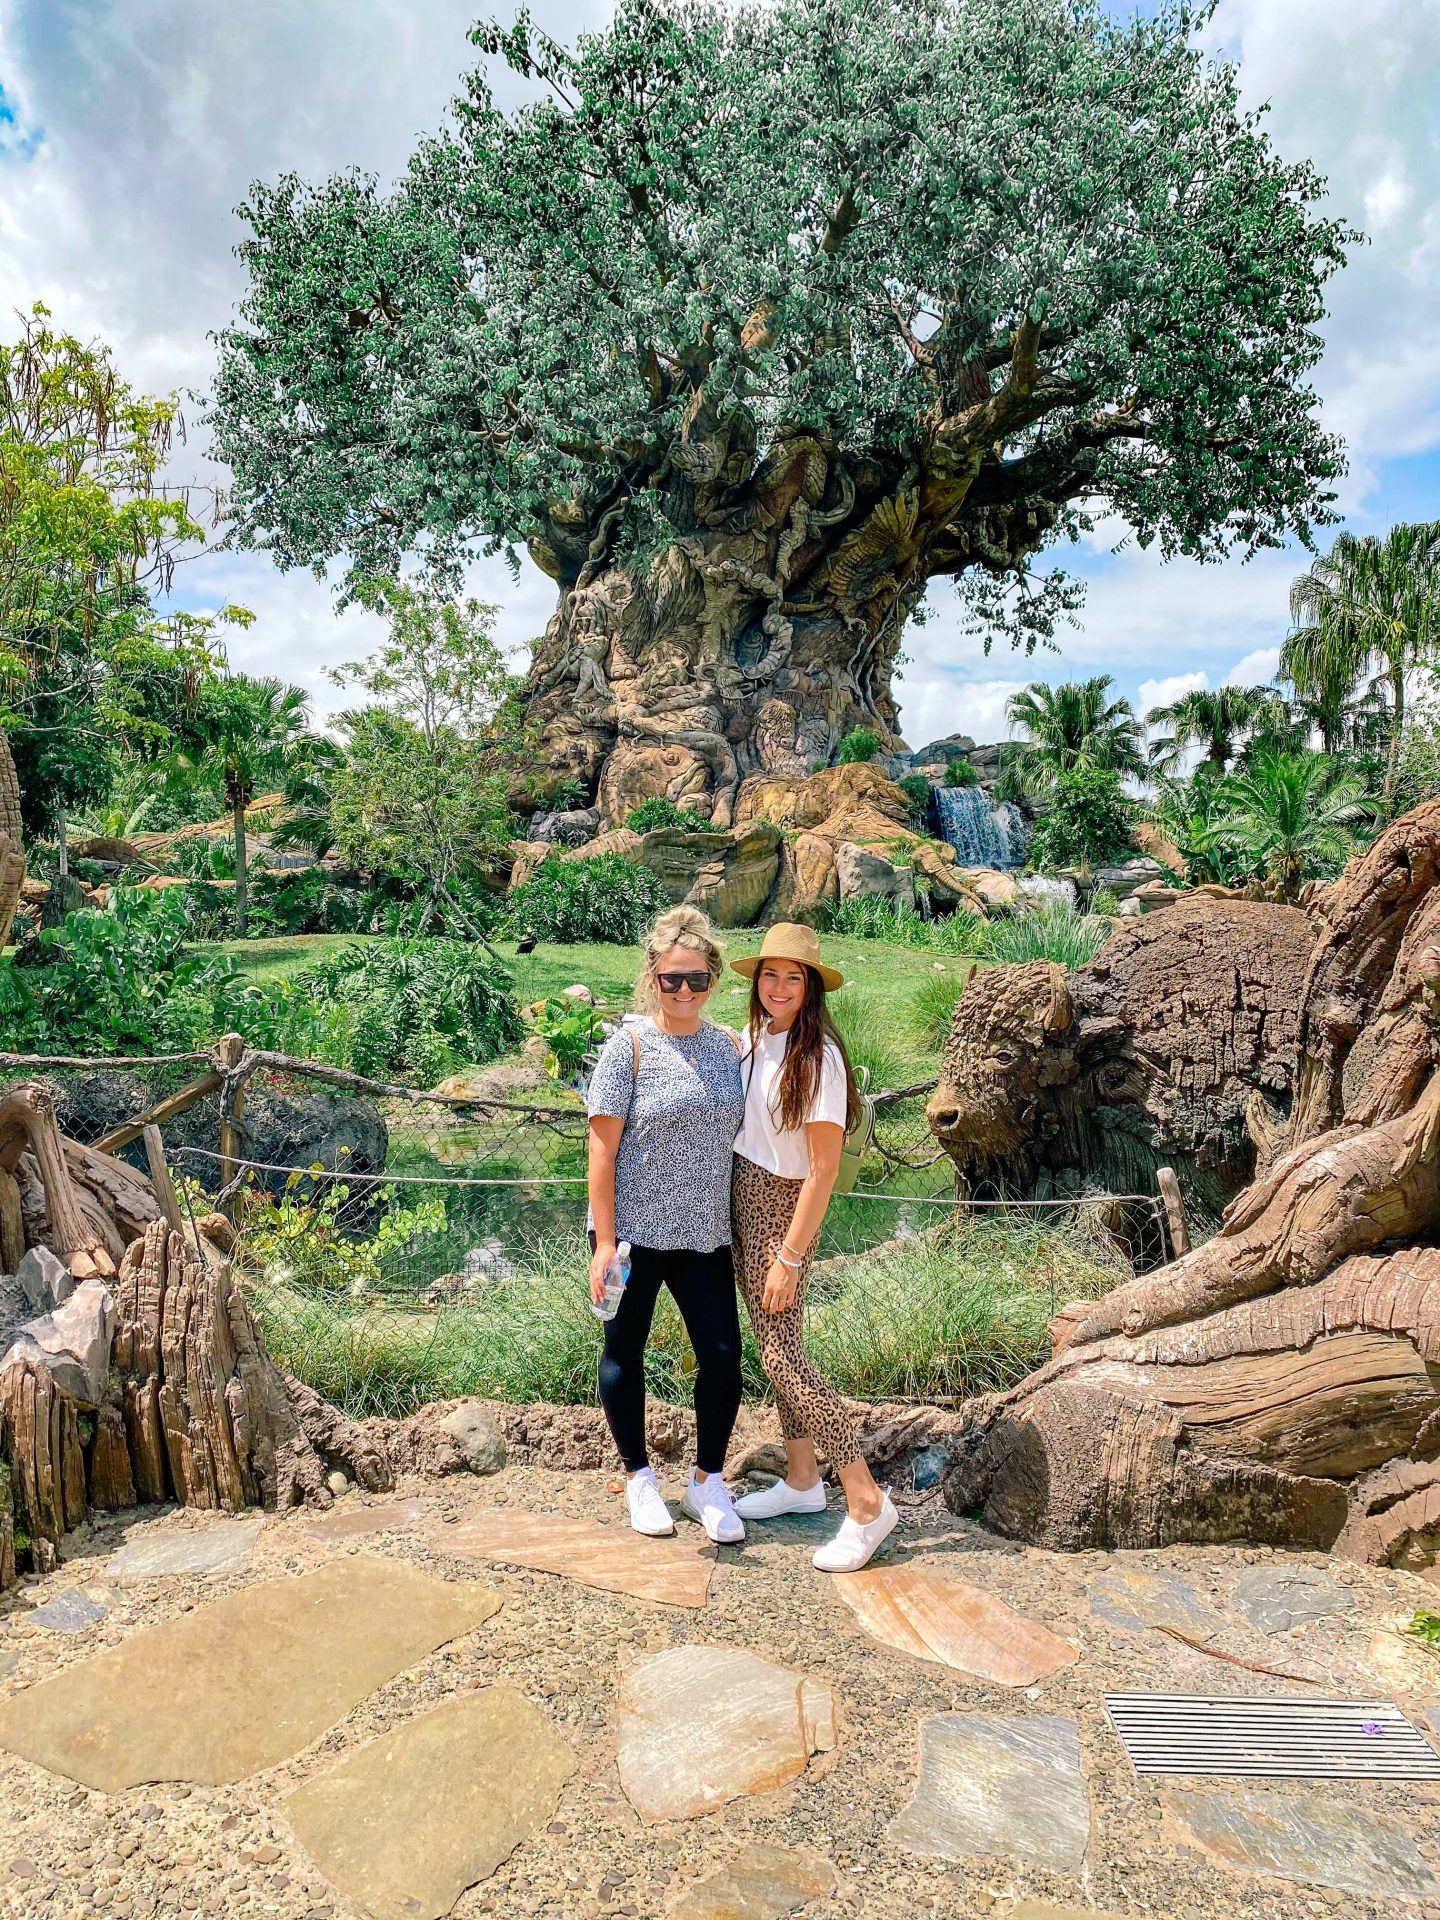 Ultimate Day at The Animal Kingdom | Disney Travel Blog - Simply Taralynn |  Food & Lifestyle Blog